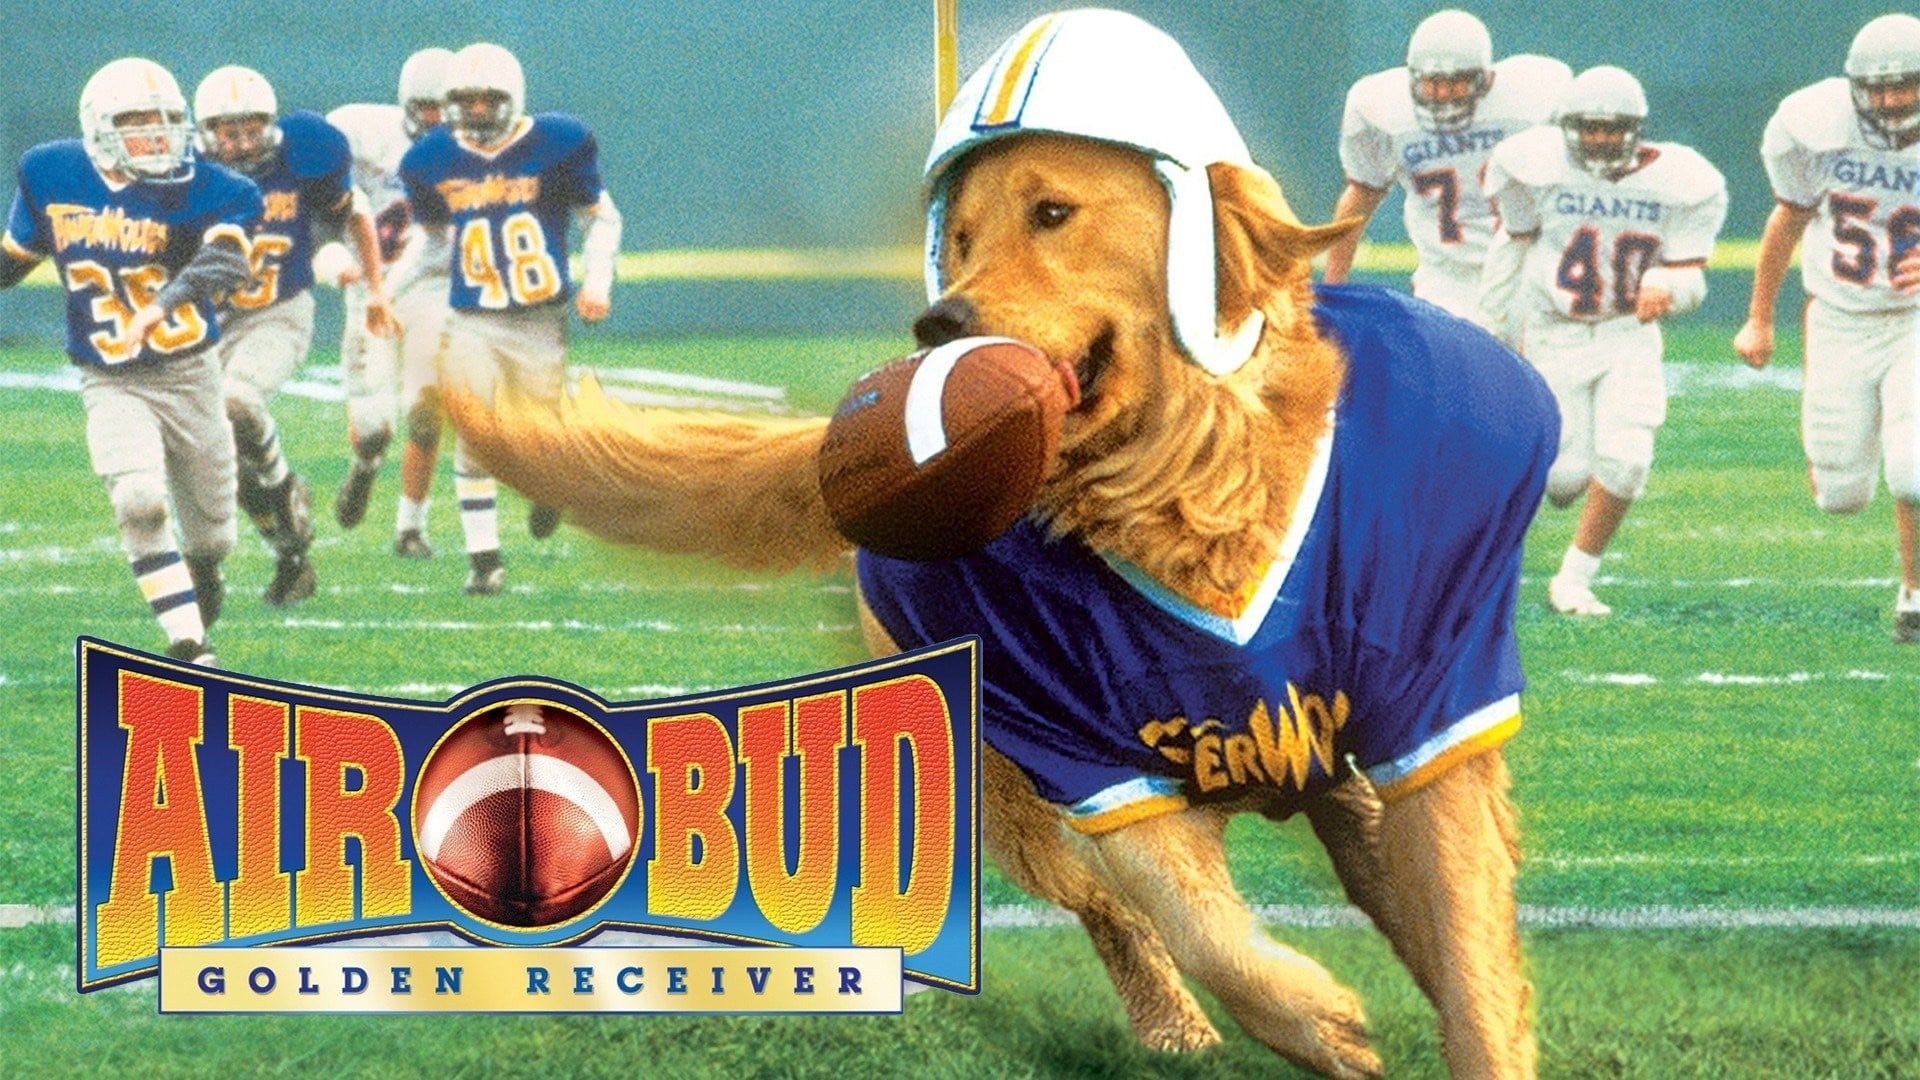 Air Bud 2 Golden Receiver (1998) ซุปเปอร์หมา ปะทะ ซุปเปอร์อึด 